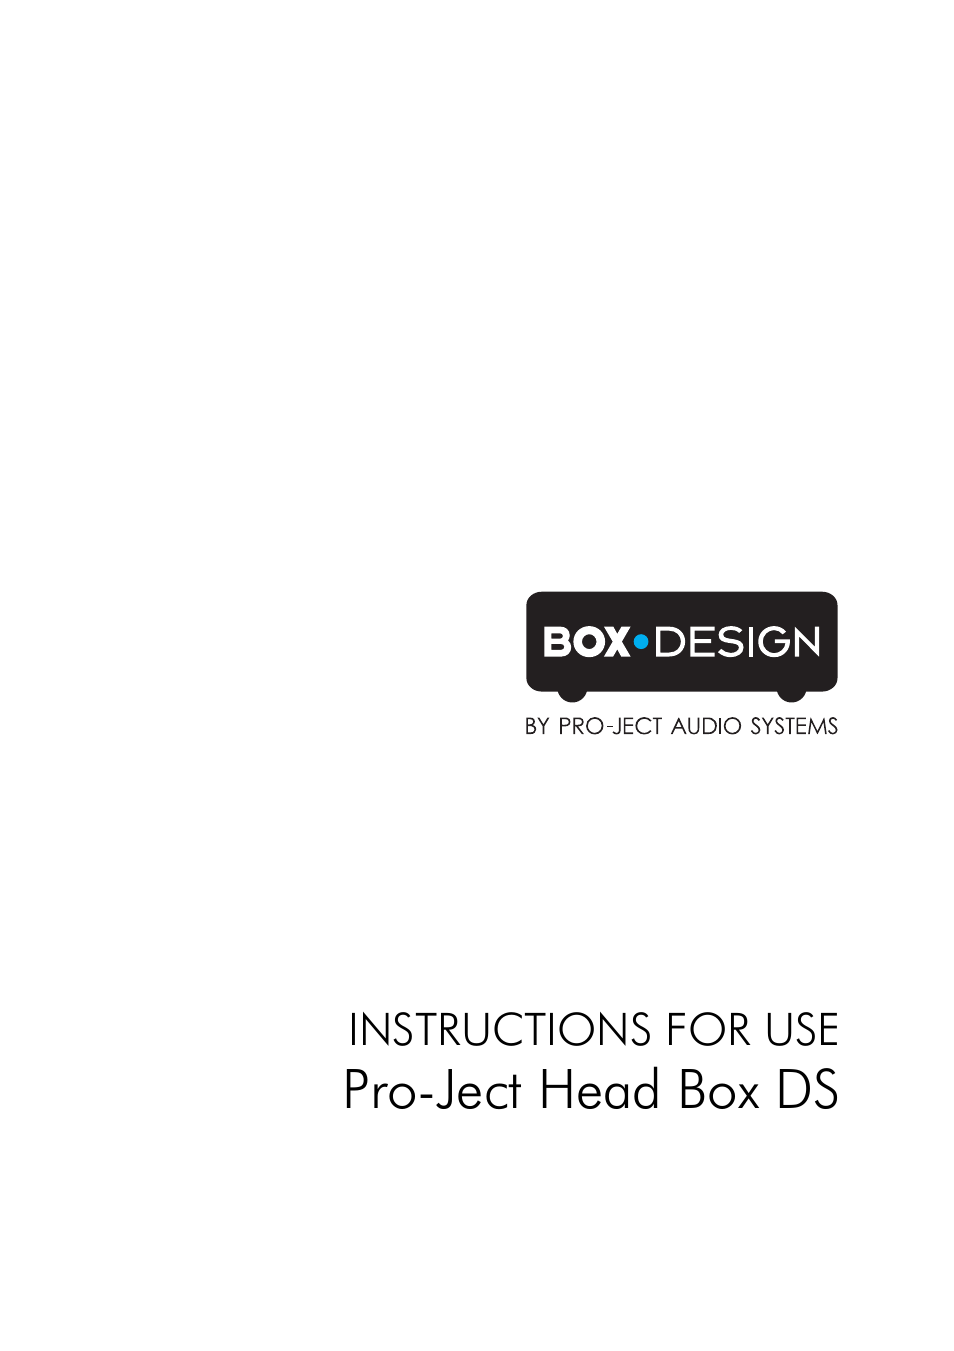 Head Box DS